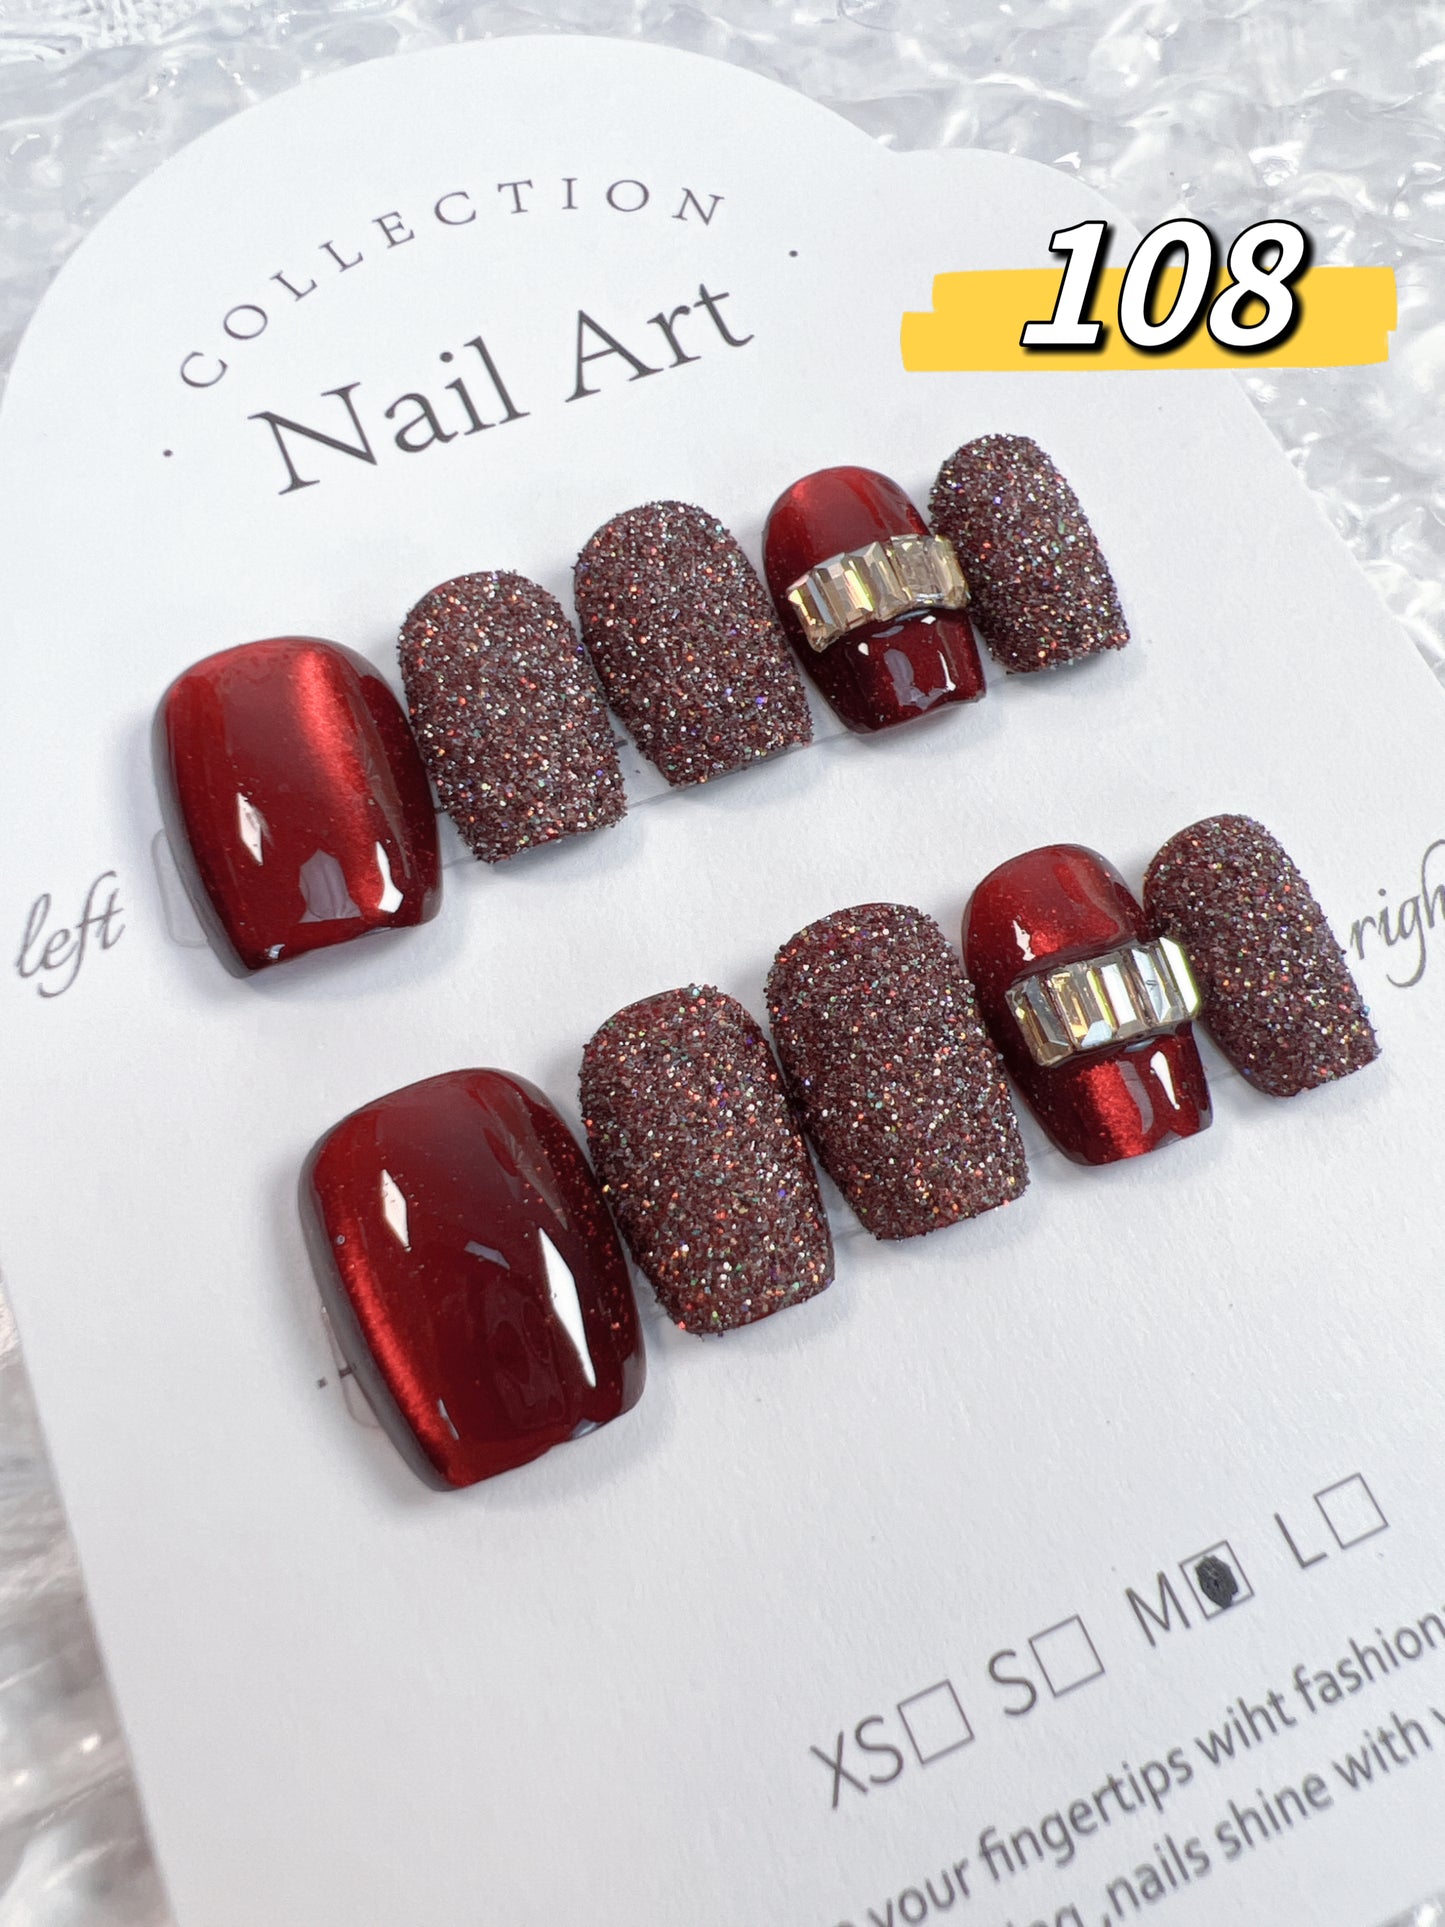 Crismas&Carton style/ (10pcs) Handmade press on nails with glue and jelly glue